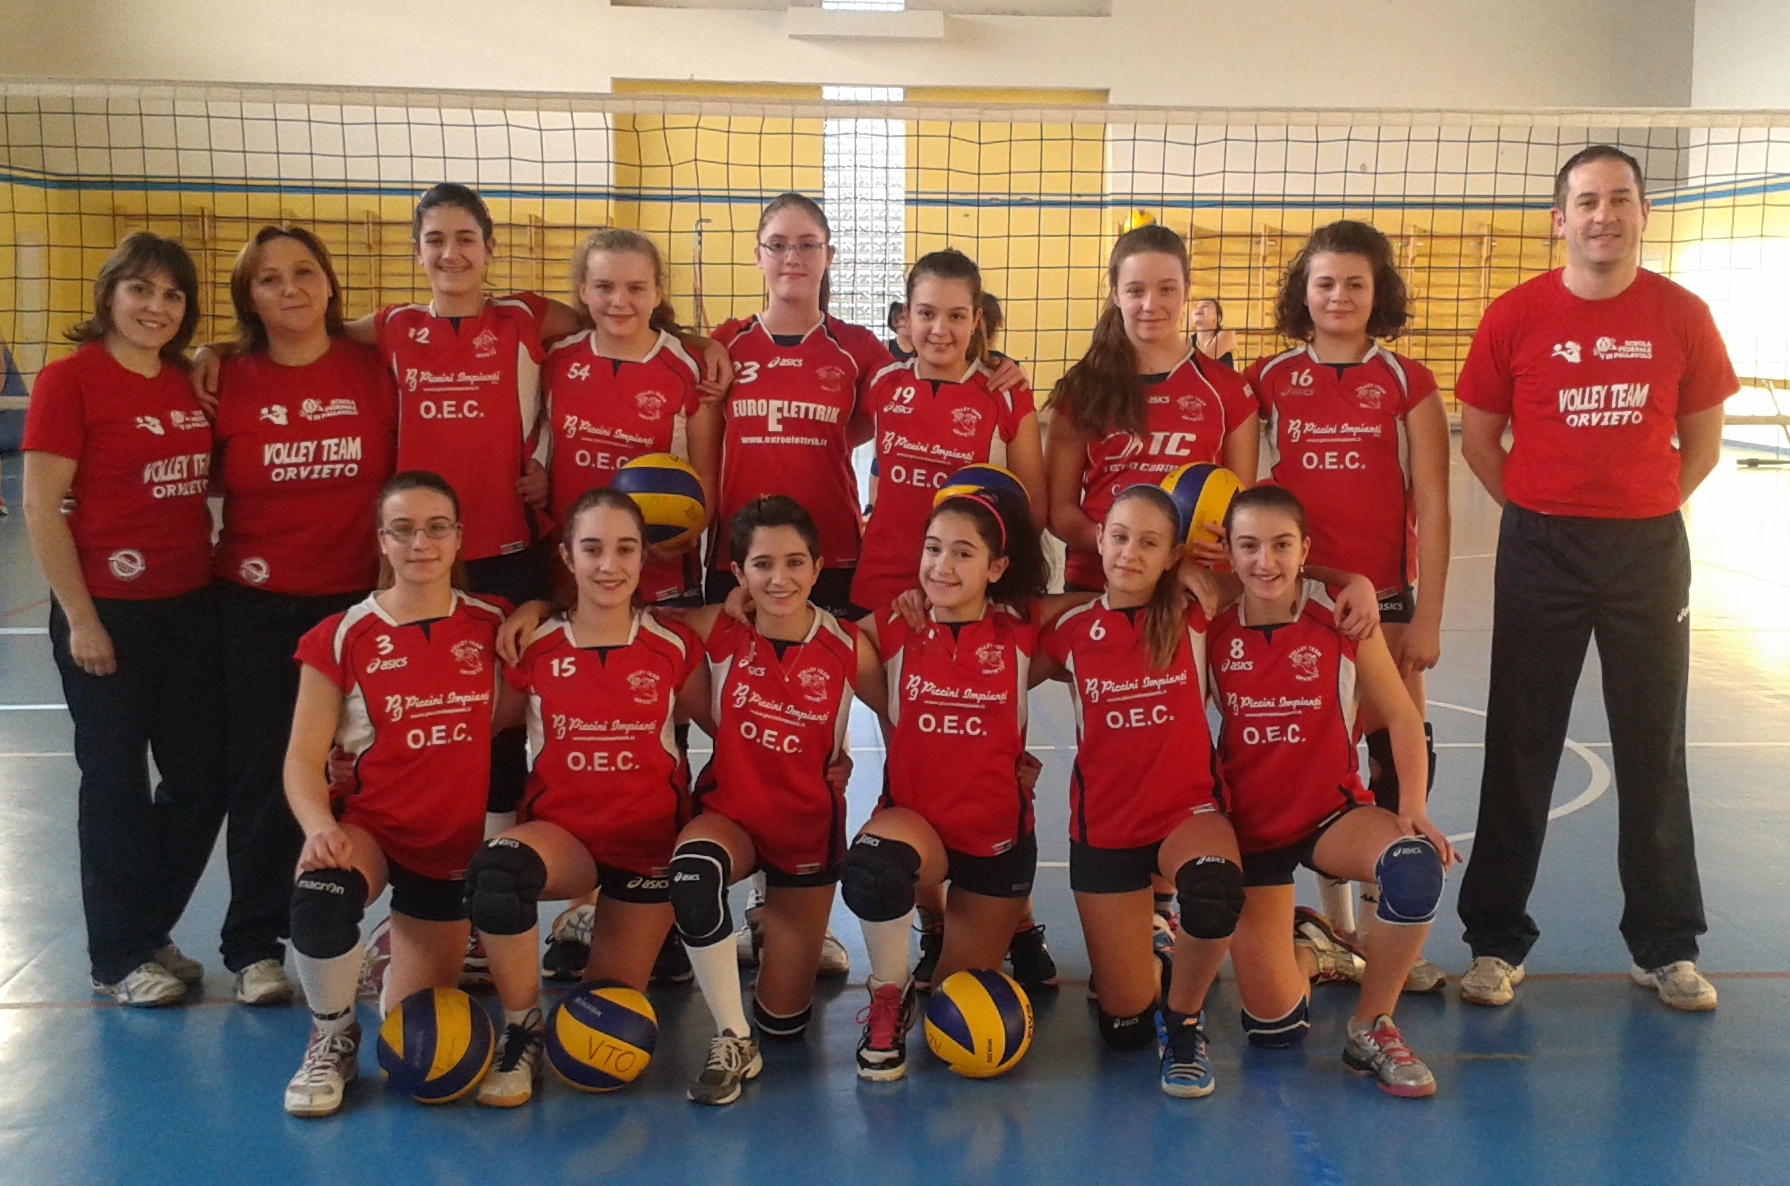 Volley Team U13, missione compiuta! Finalissima play-off